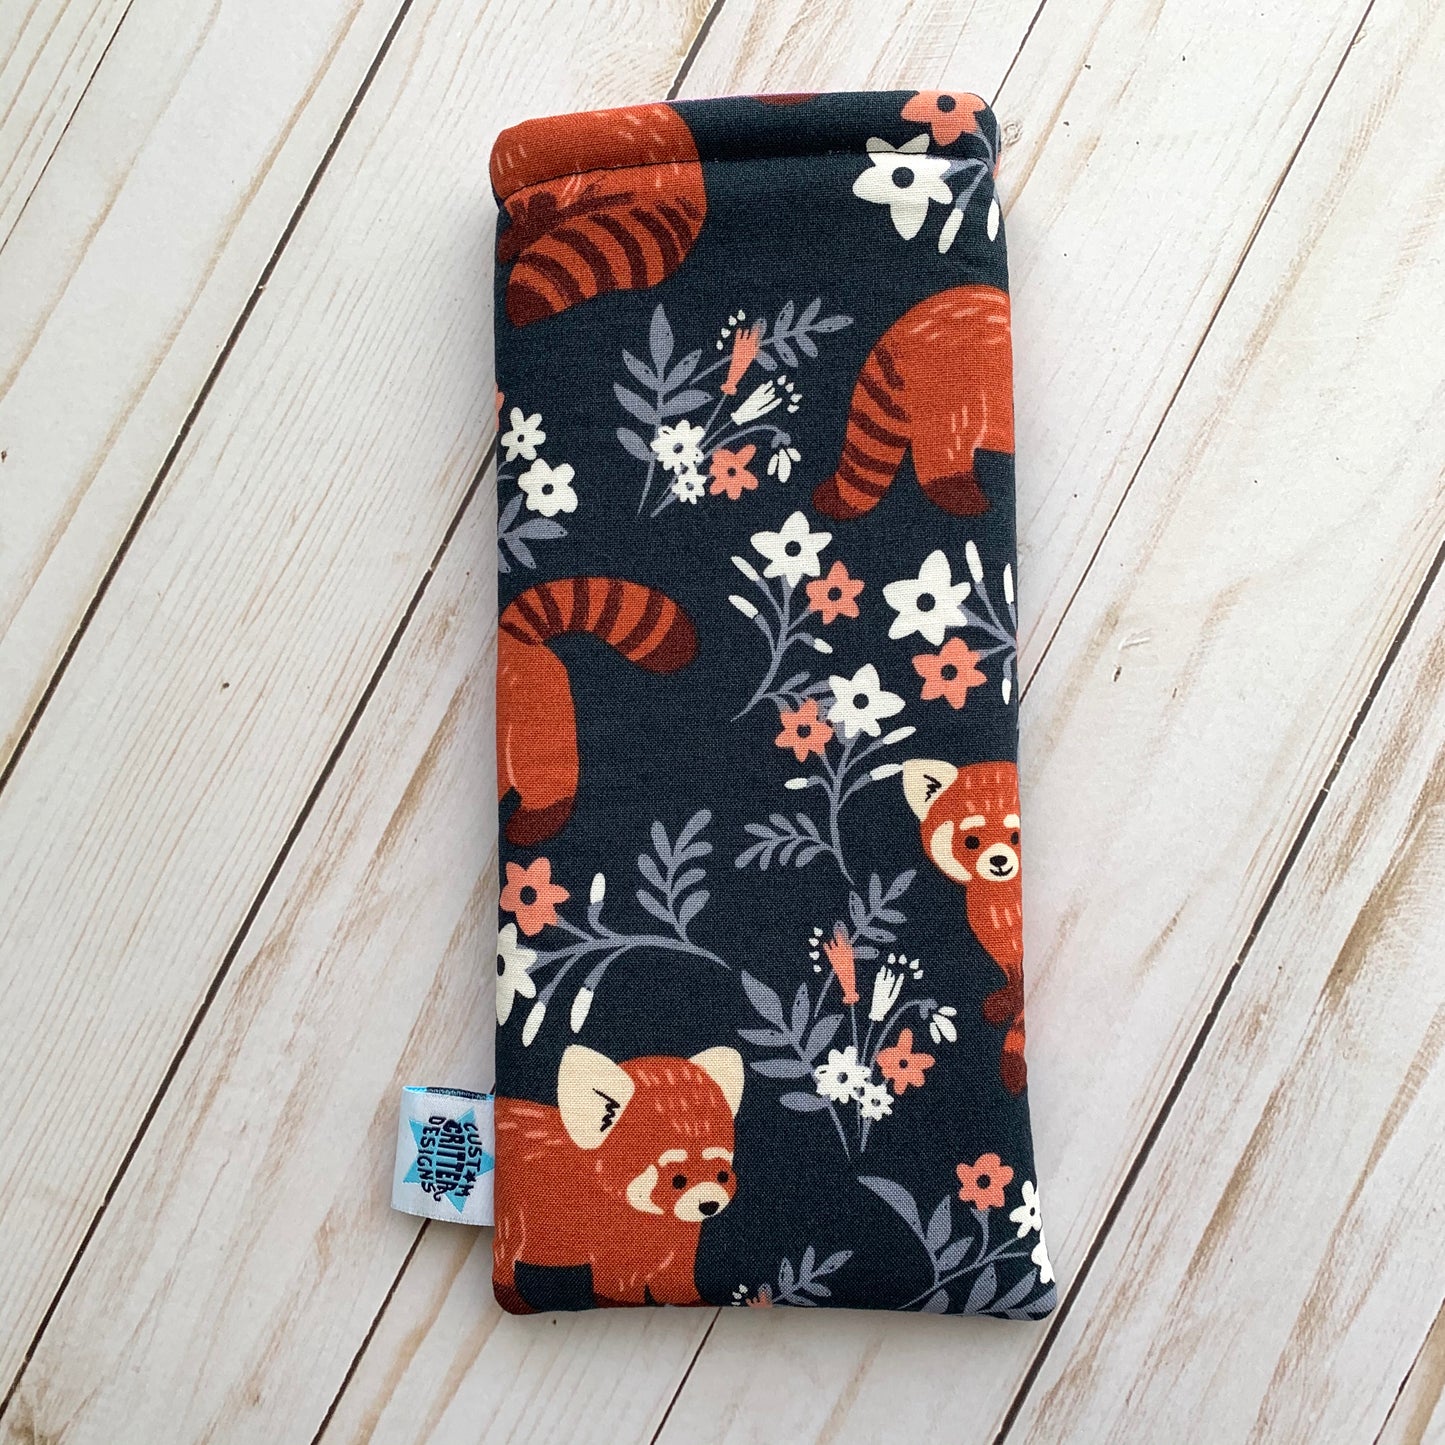 Red Pandas - Bookmark Sleeve